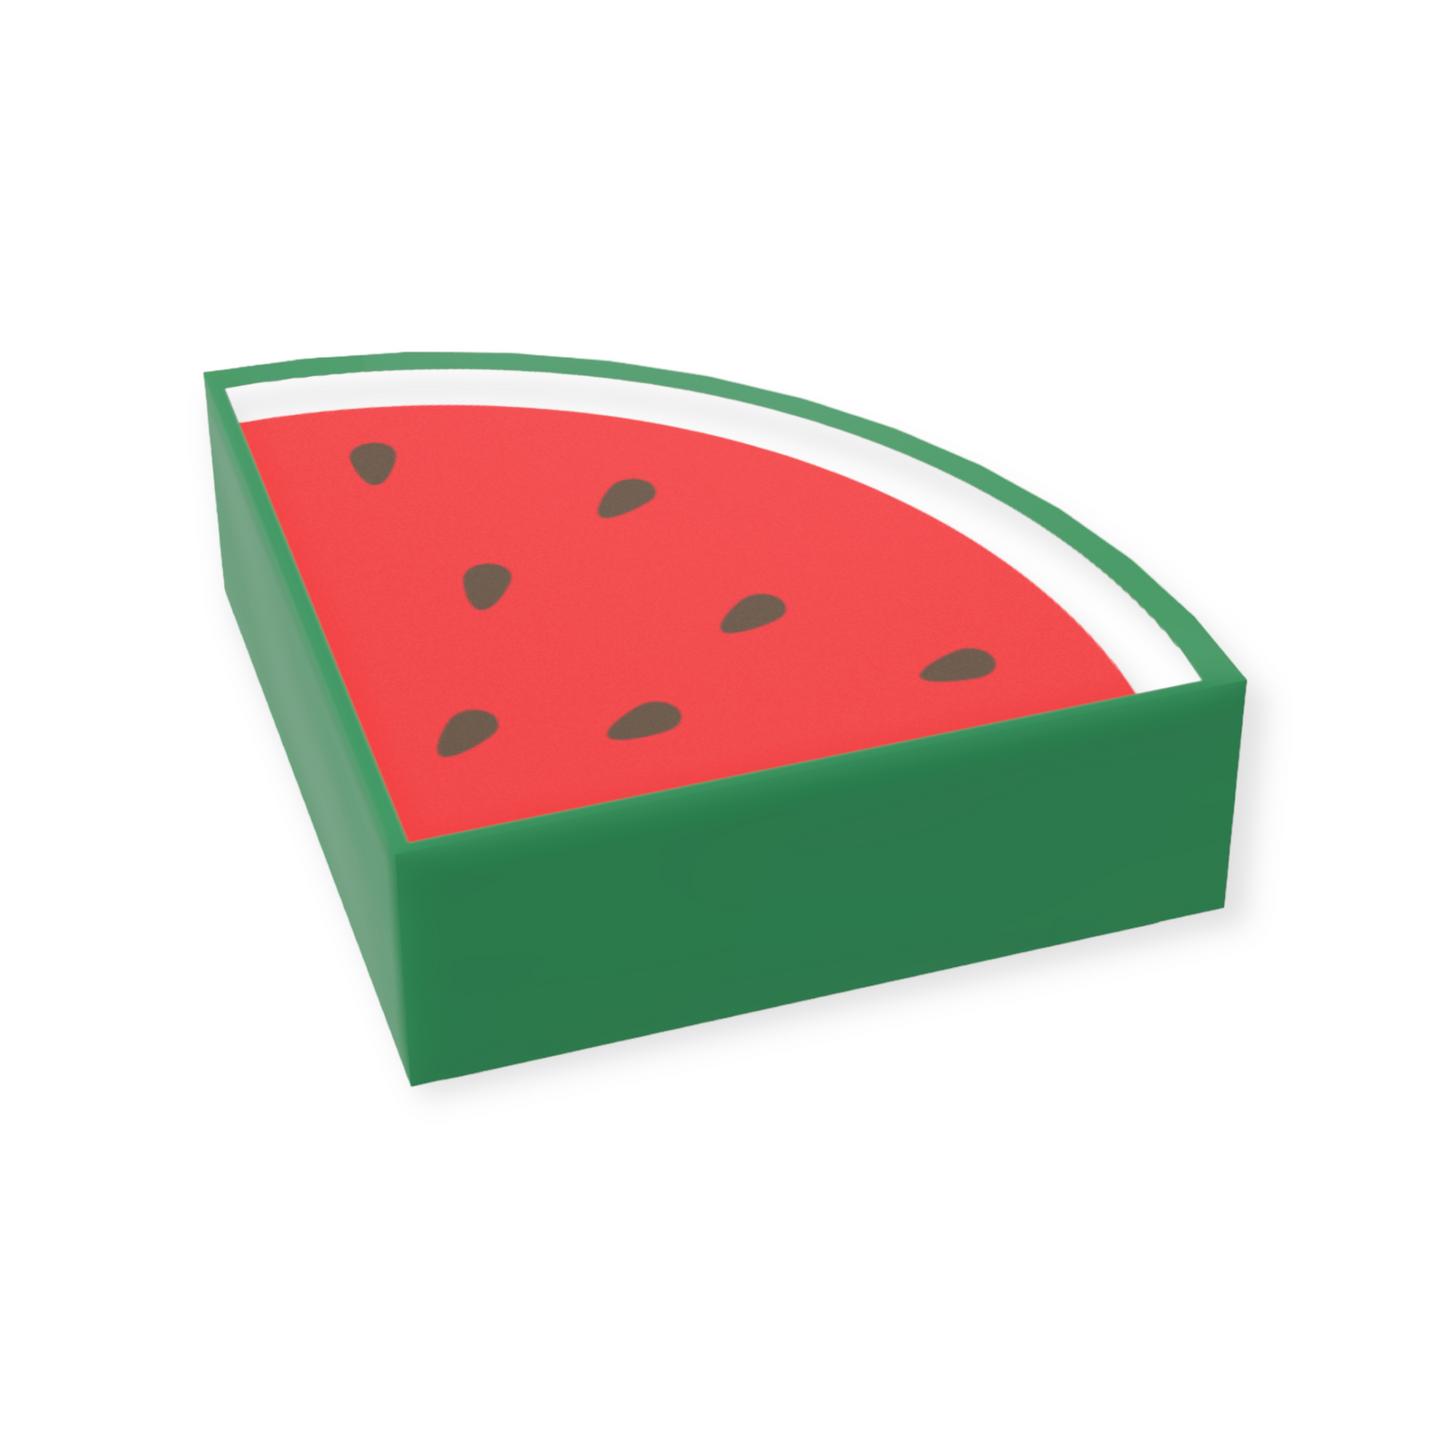 LEGO Tile Round 1x1 Quarter - Wassermelone